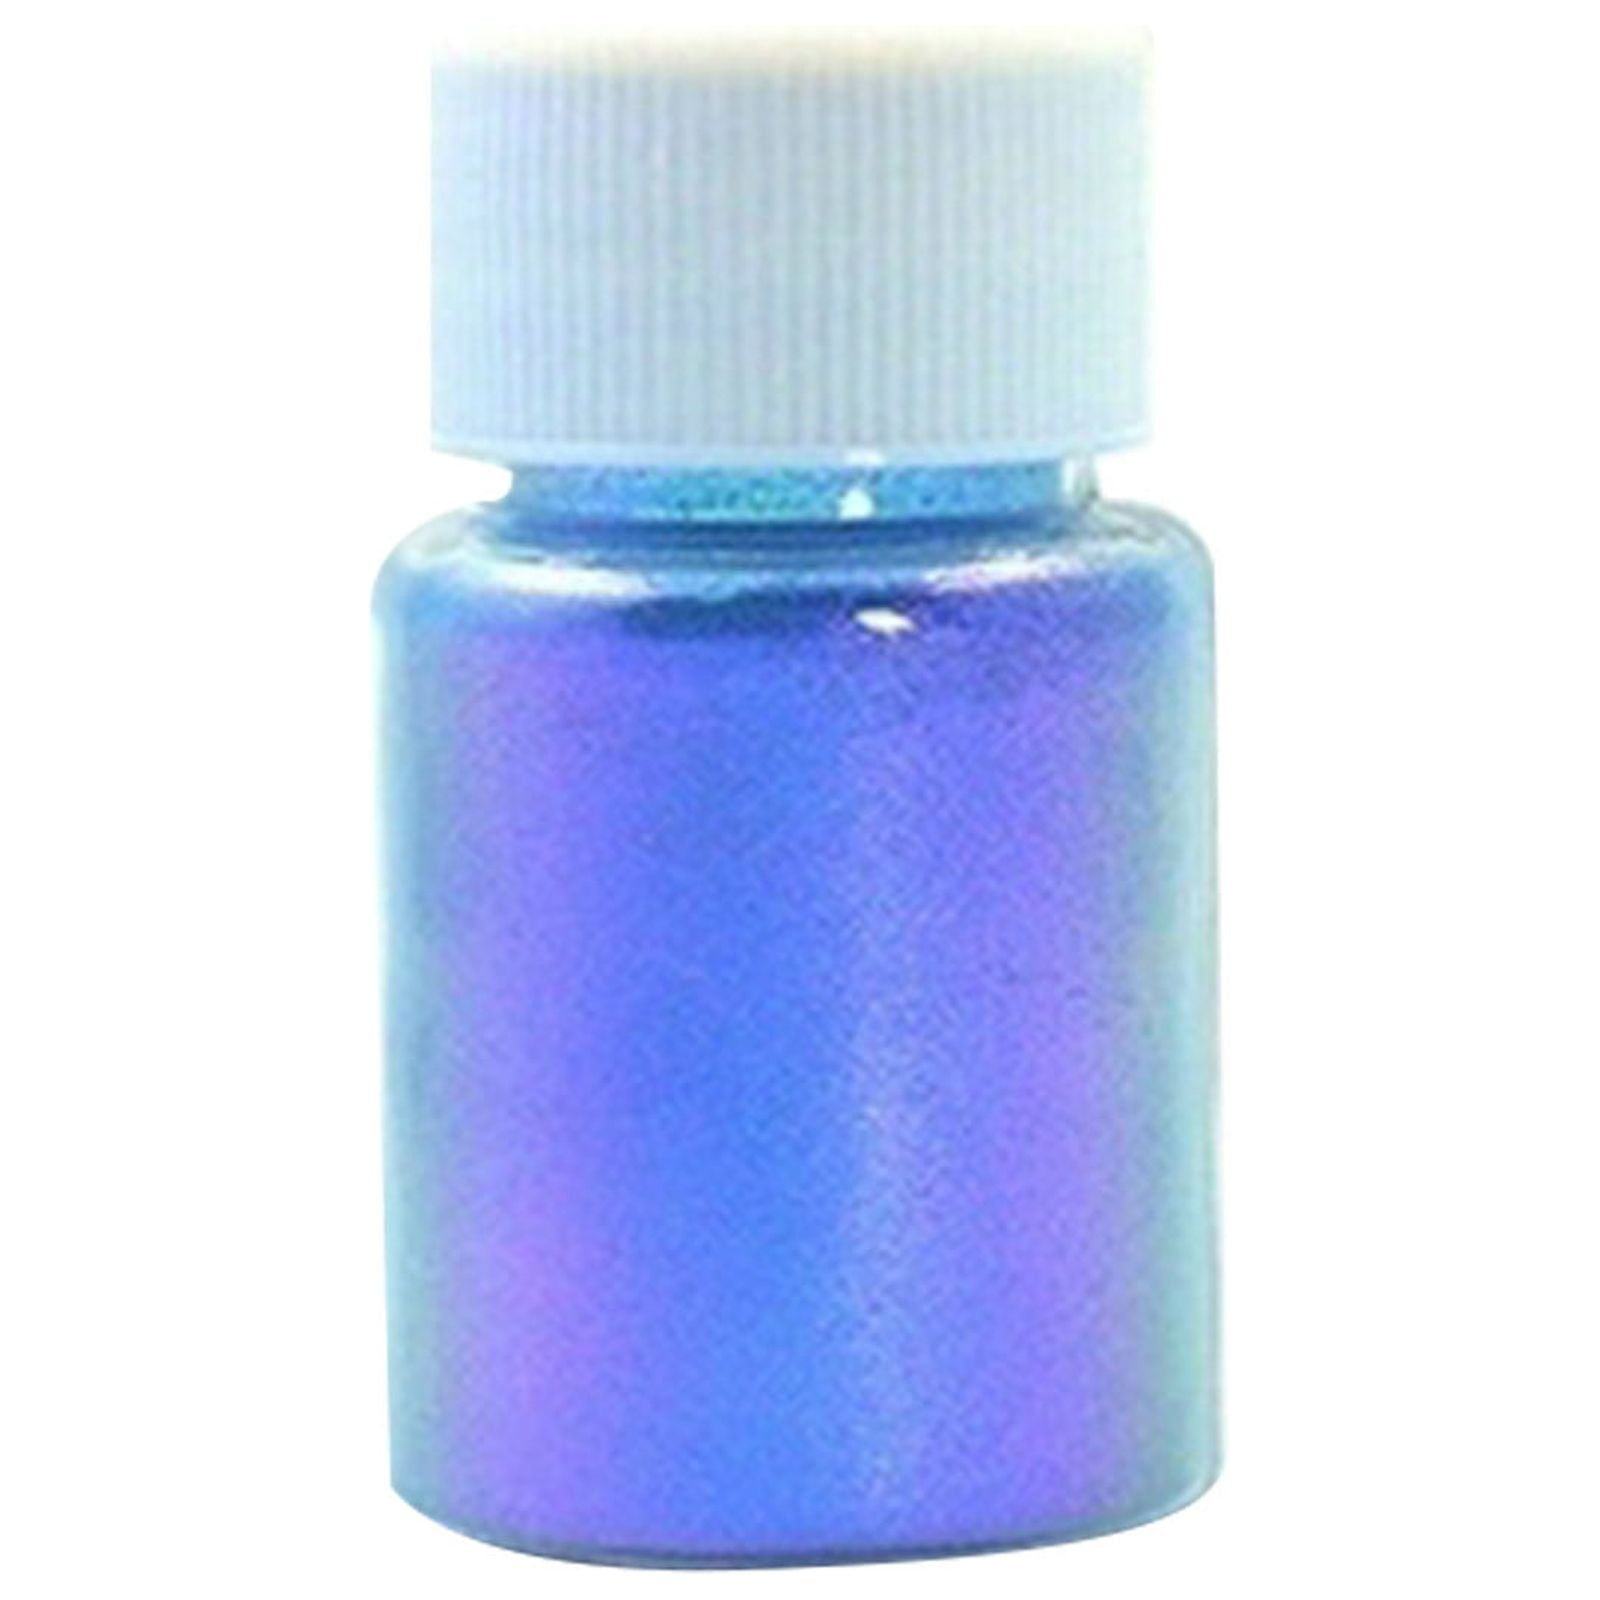 SEISSO Mica Powder for Epoxy, 32 Colors Dye Epoxy Resin Color Pigment Powder for Lip Gloss, Bath Bombs, Soap Making (5g/0.18oz)Â